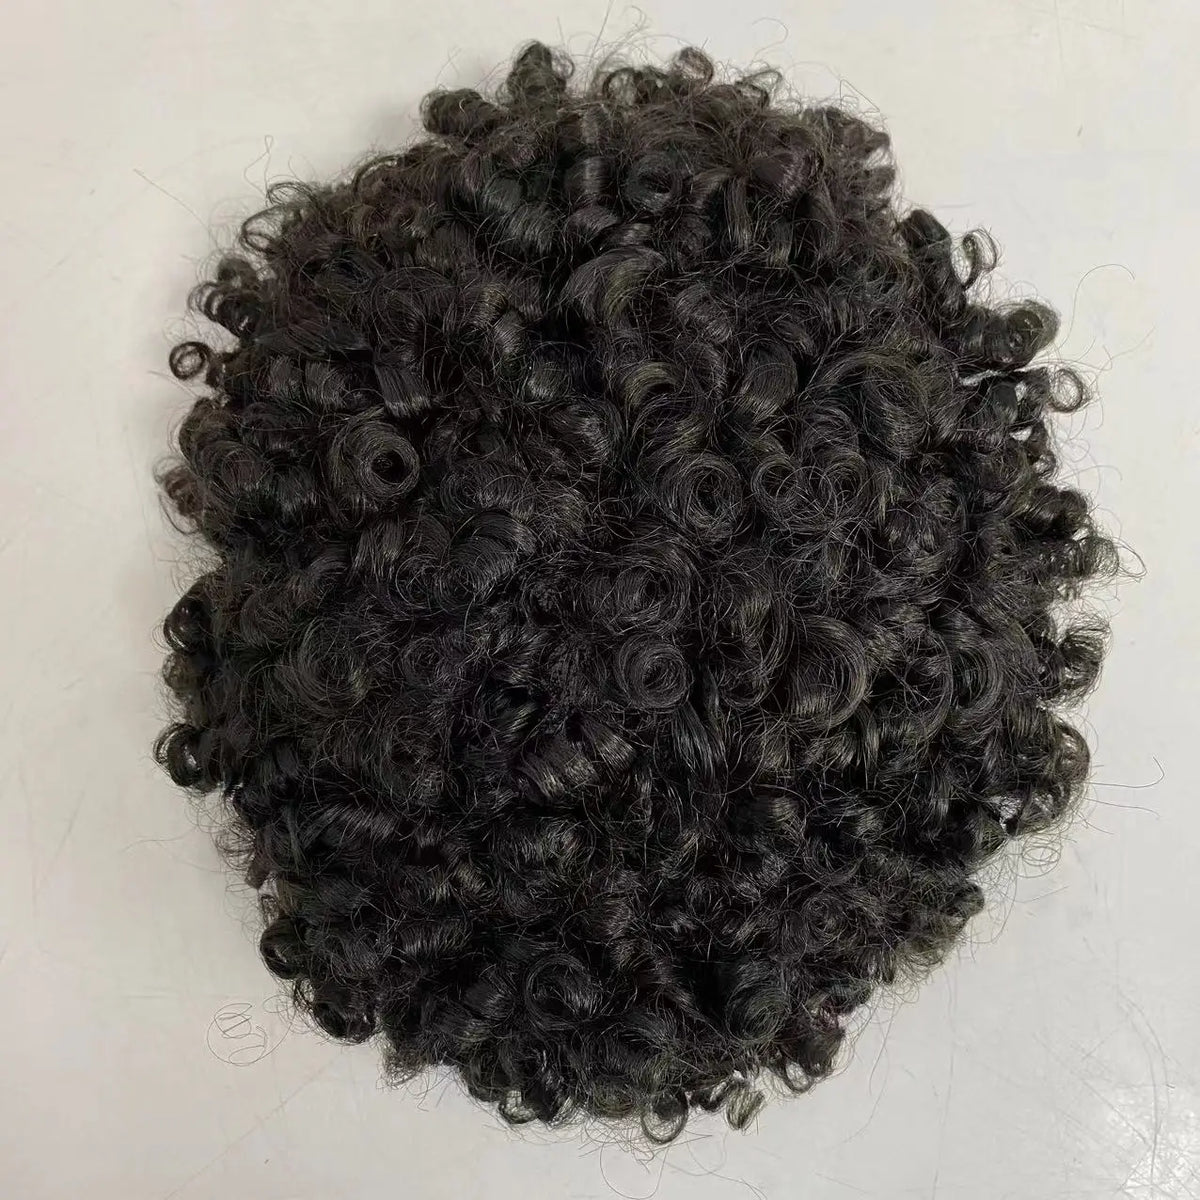 15mm Curl 7x9 Toupee Full Lace Units for Black Men